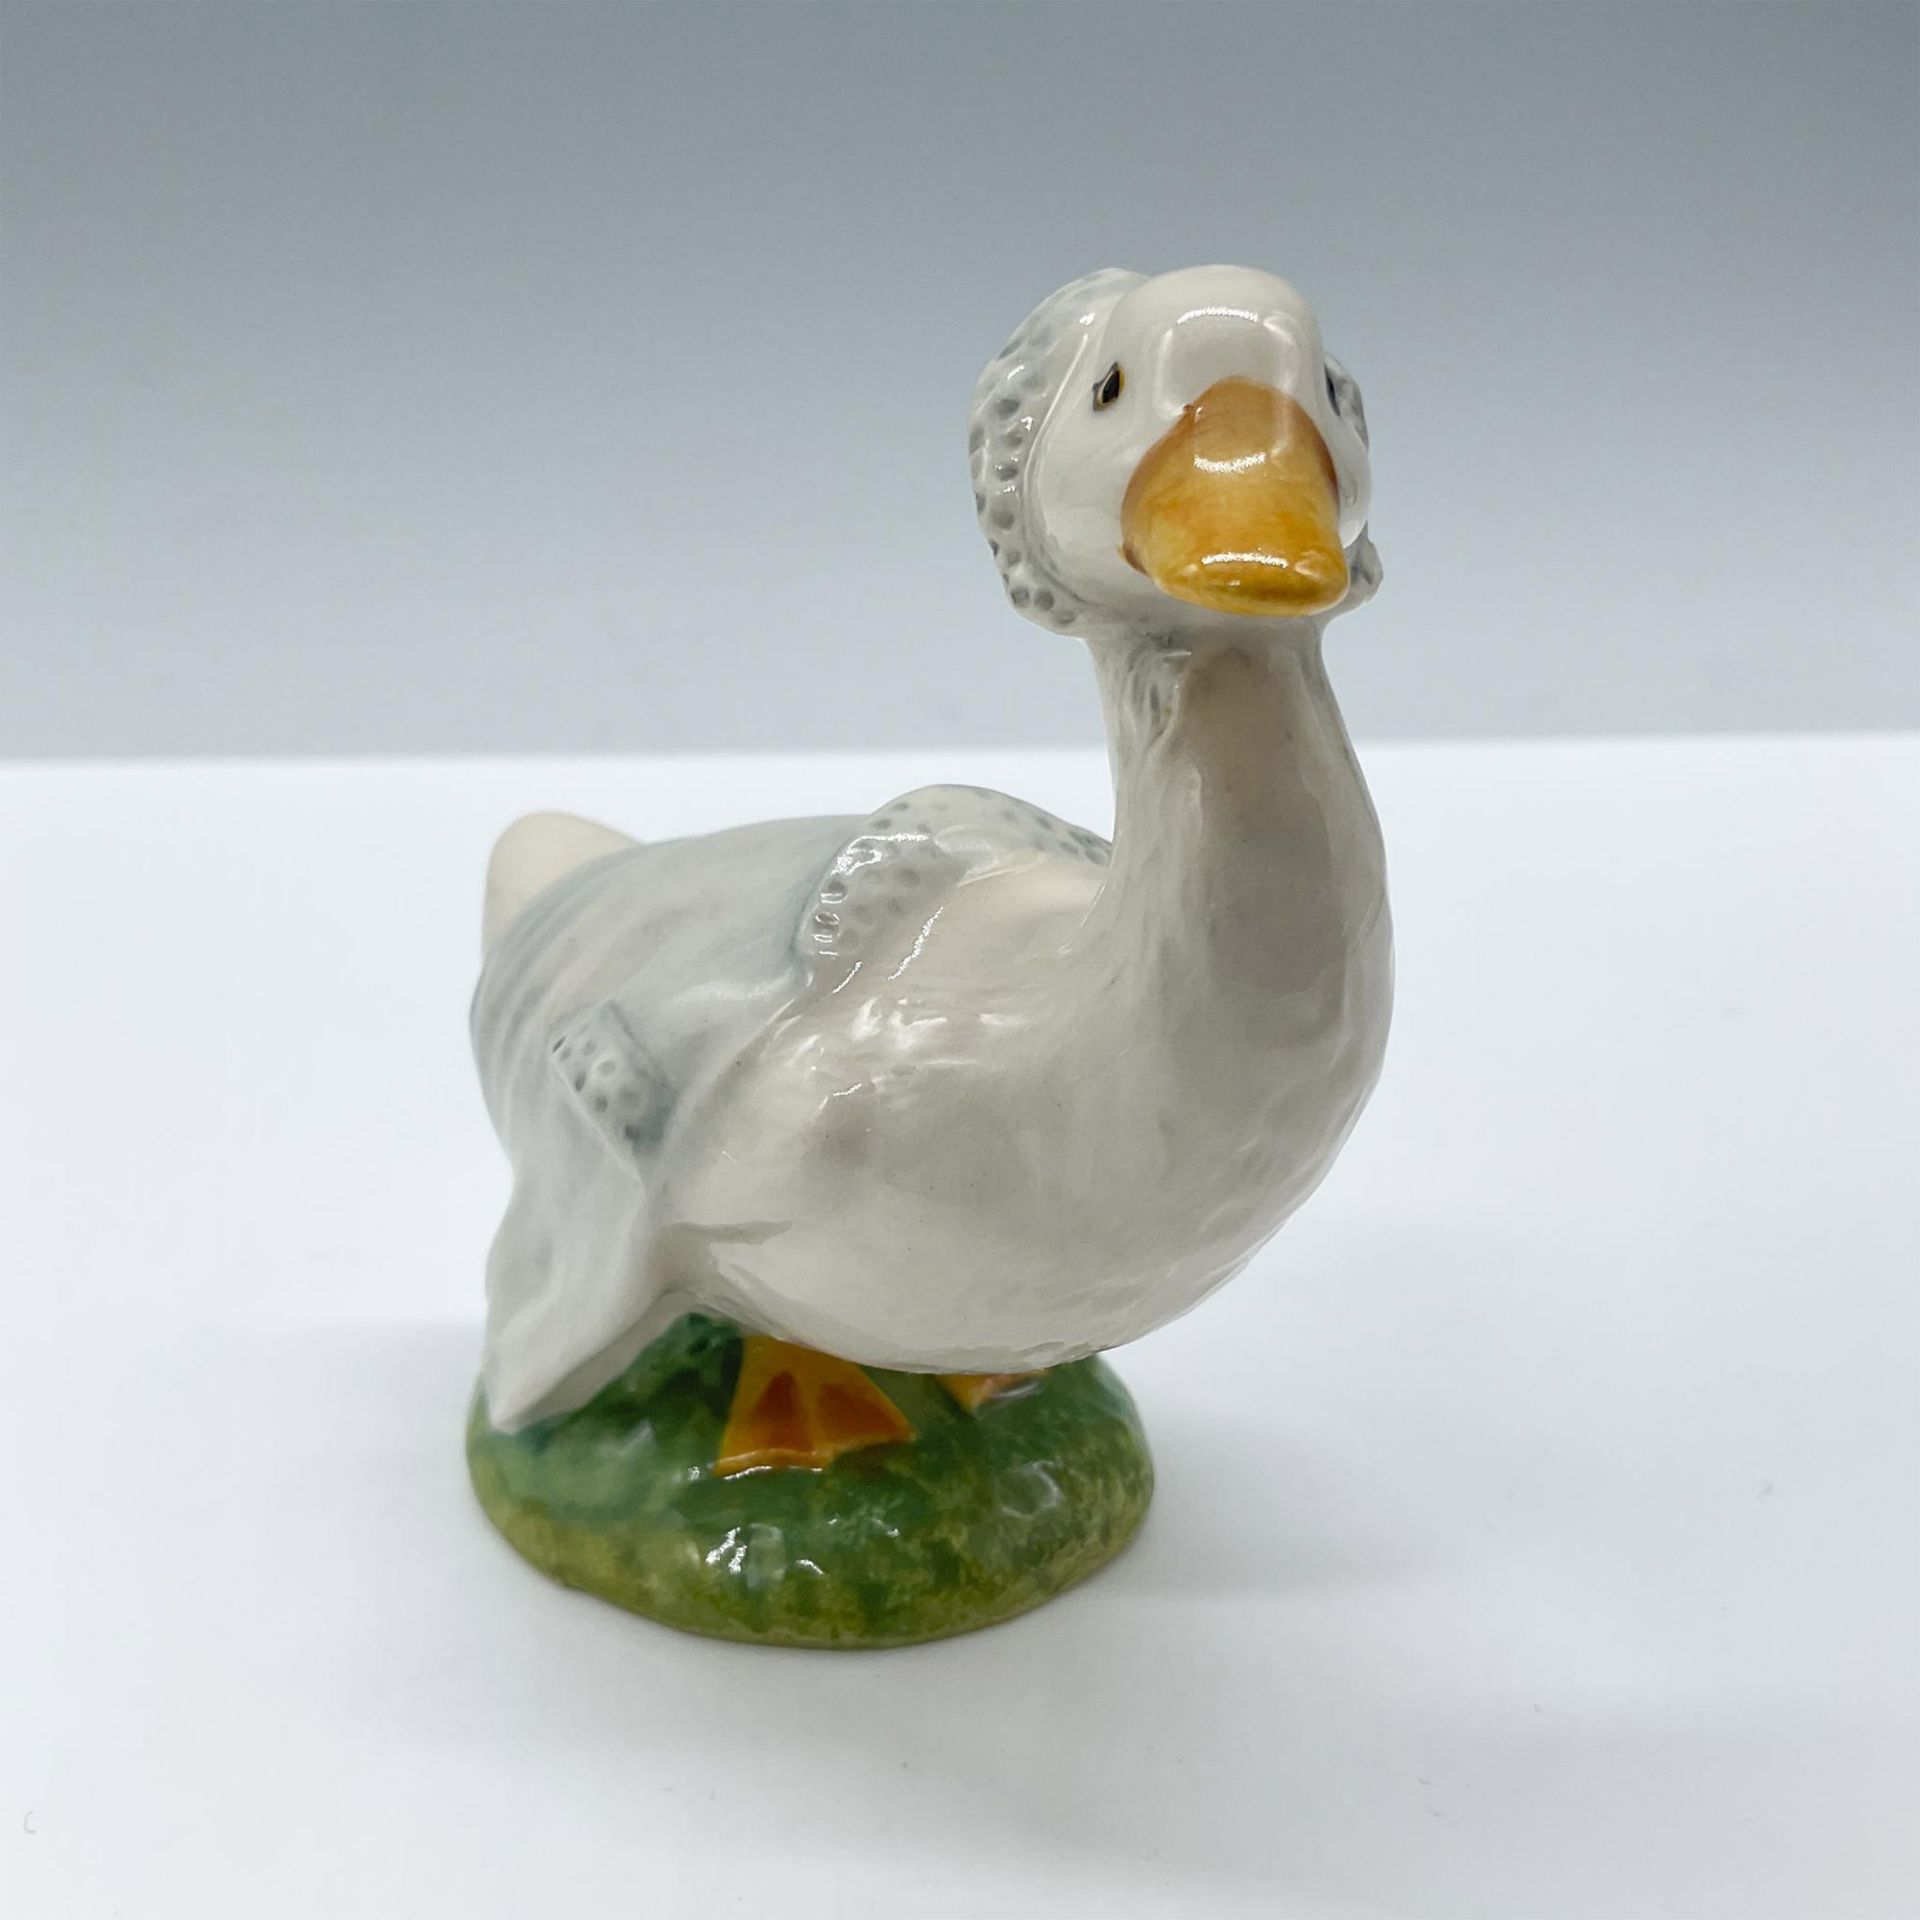 Royal Albert Beatrix Potter Figurine, Rebeccah Puddle-Duck